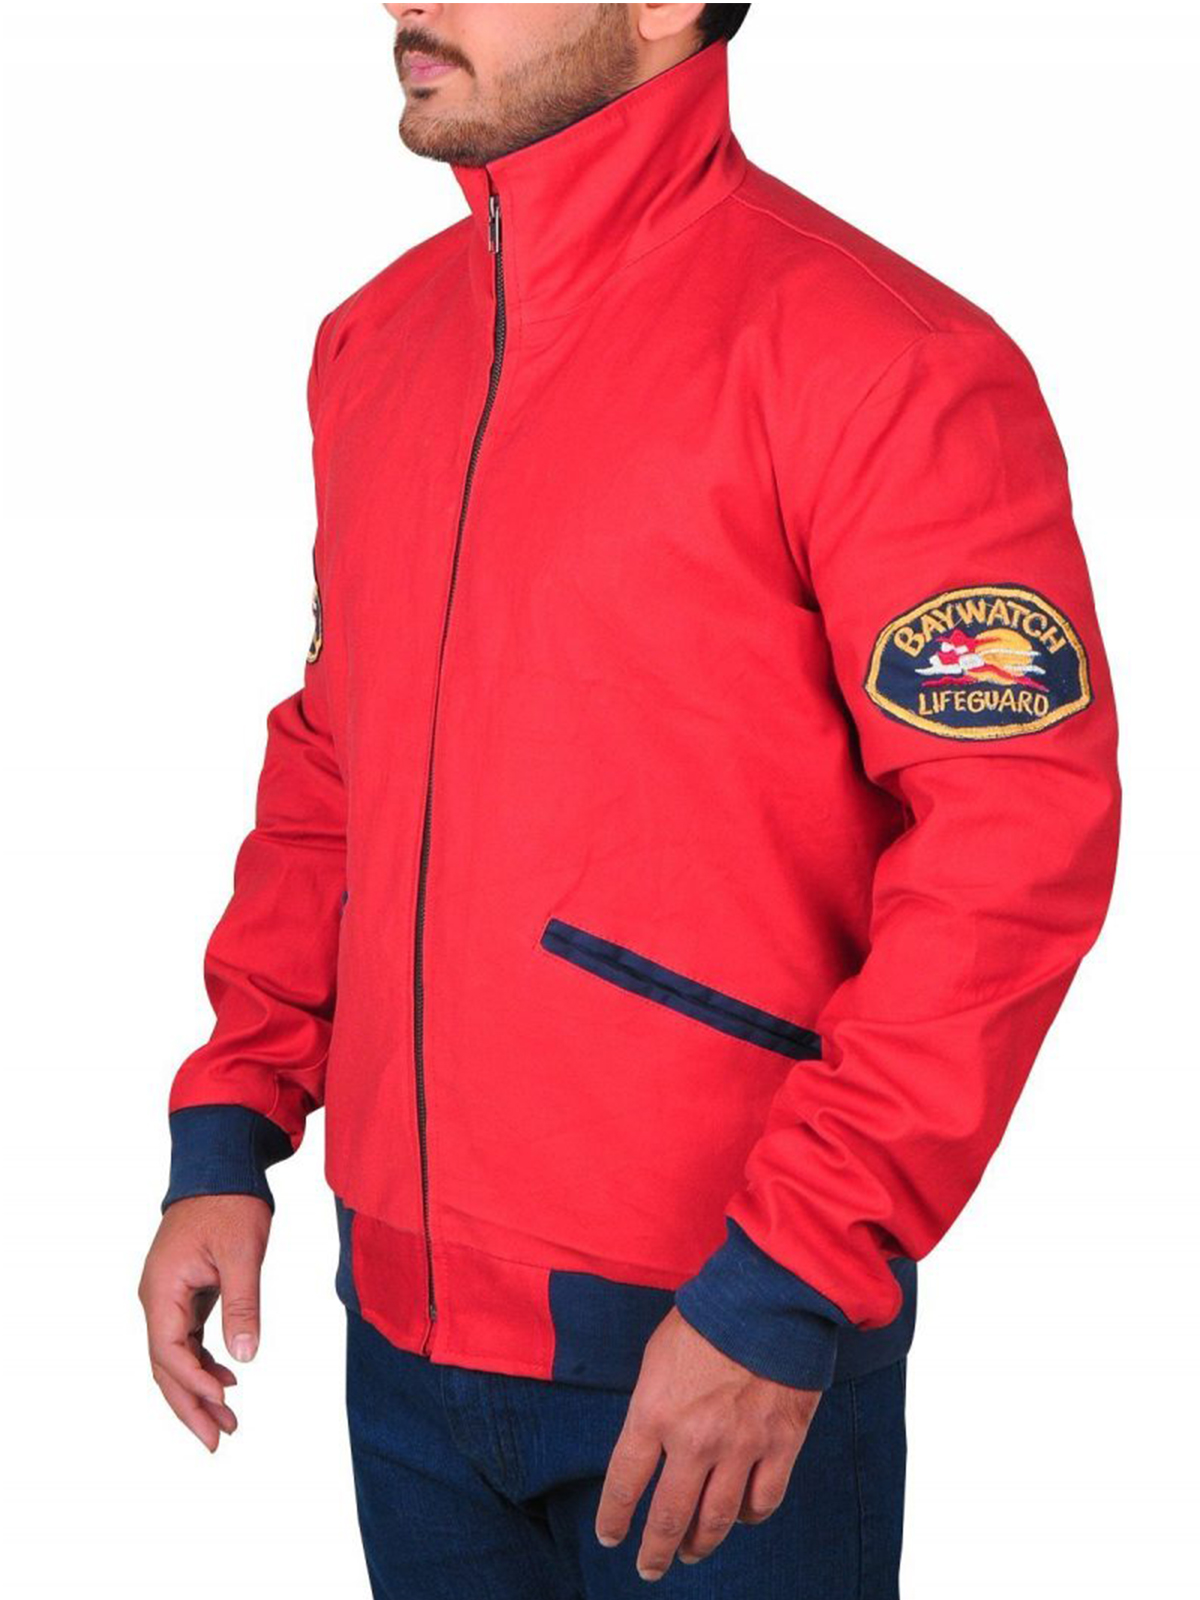 Baywatch Mitch Buchannon Cotton Jacket – Bay Perfect